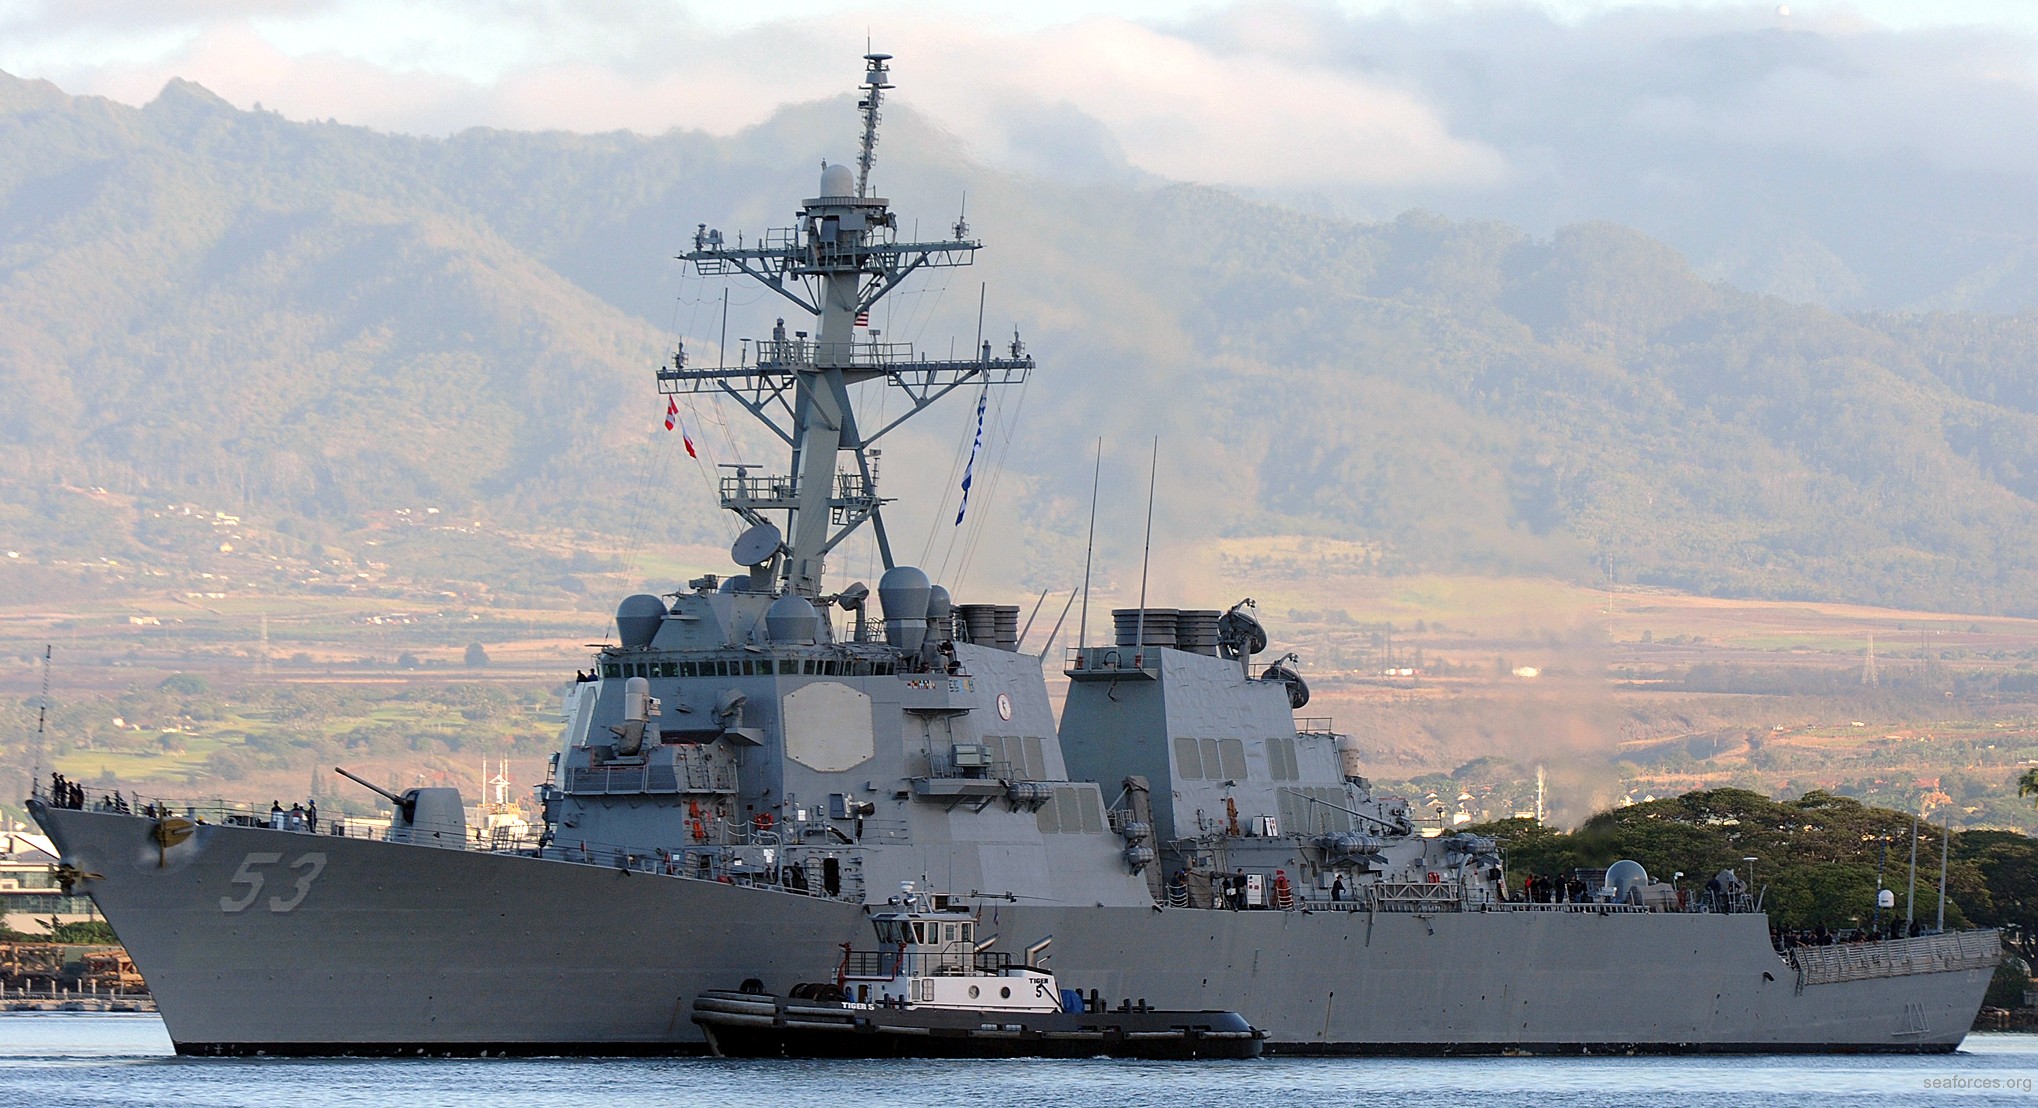 ddg-53 uss john paul jones destroyer us navy 04 joint base pearl harbor hickam hawaii